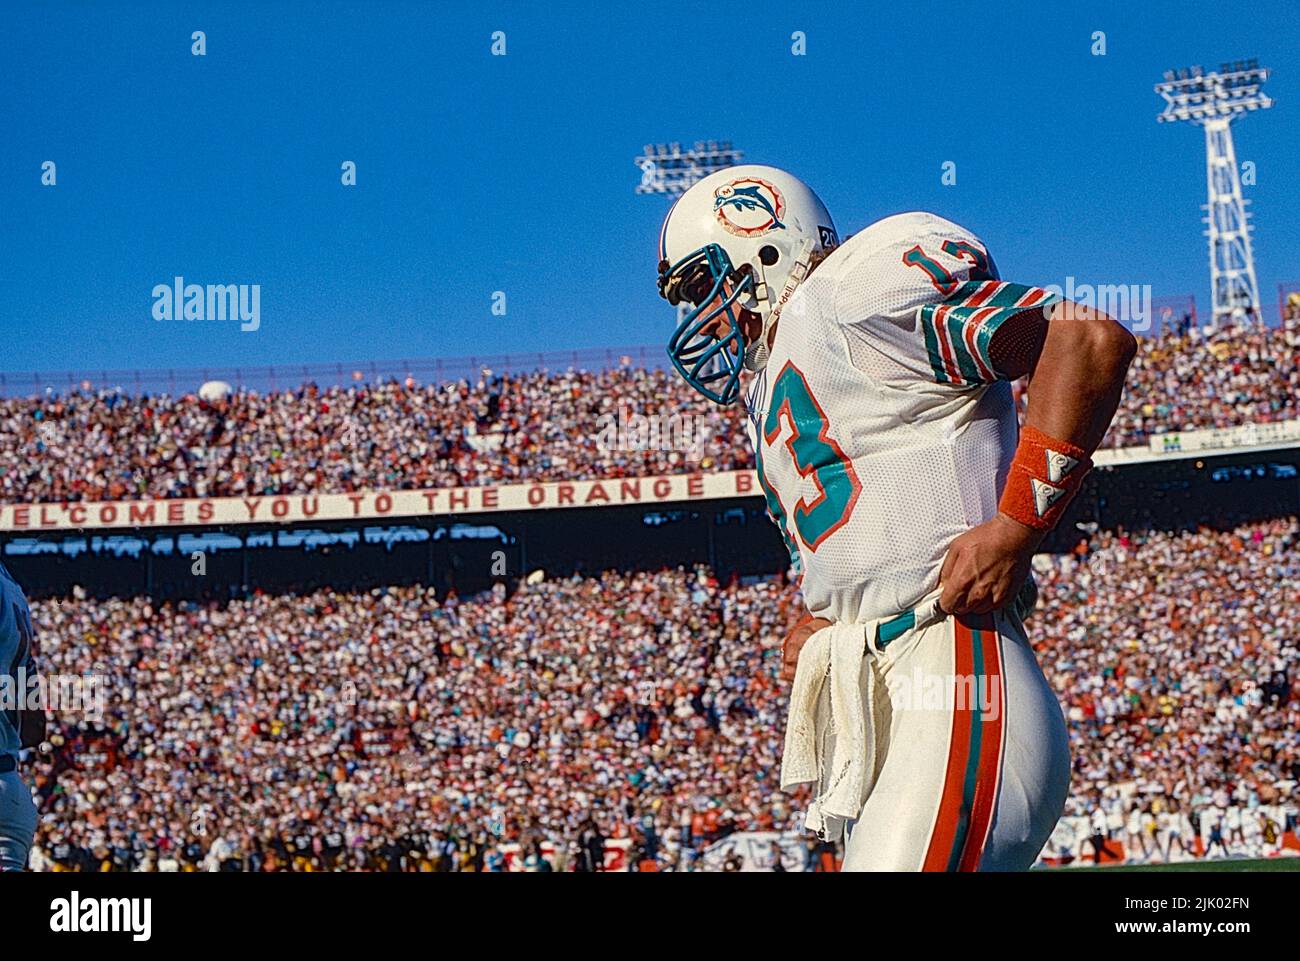 NFL Football Dan Marino quarterback for the Miami Dolphins. Stock Photo